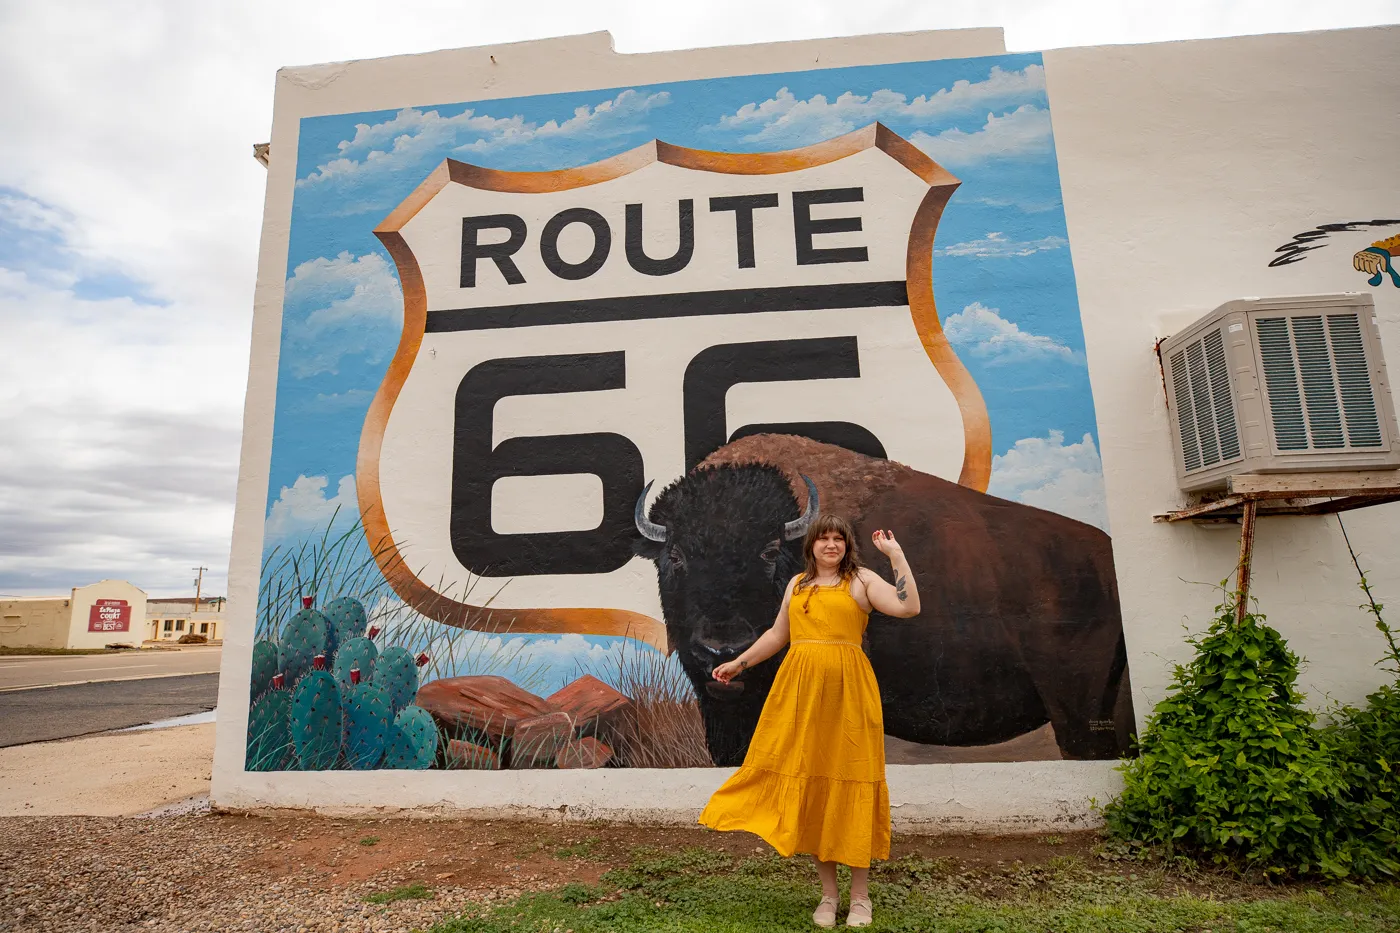 Murals at Tee Pee Curios in Tucumcari, New Mexico - Route 66 Roadside Attraction